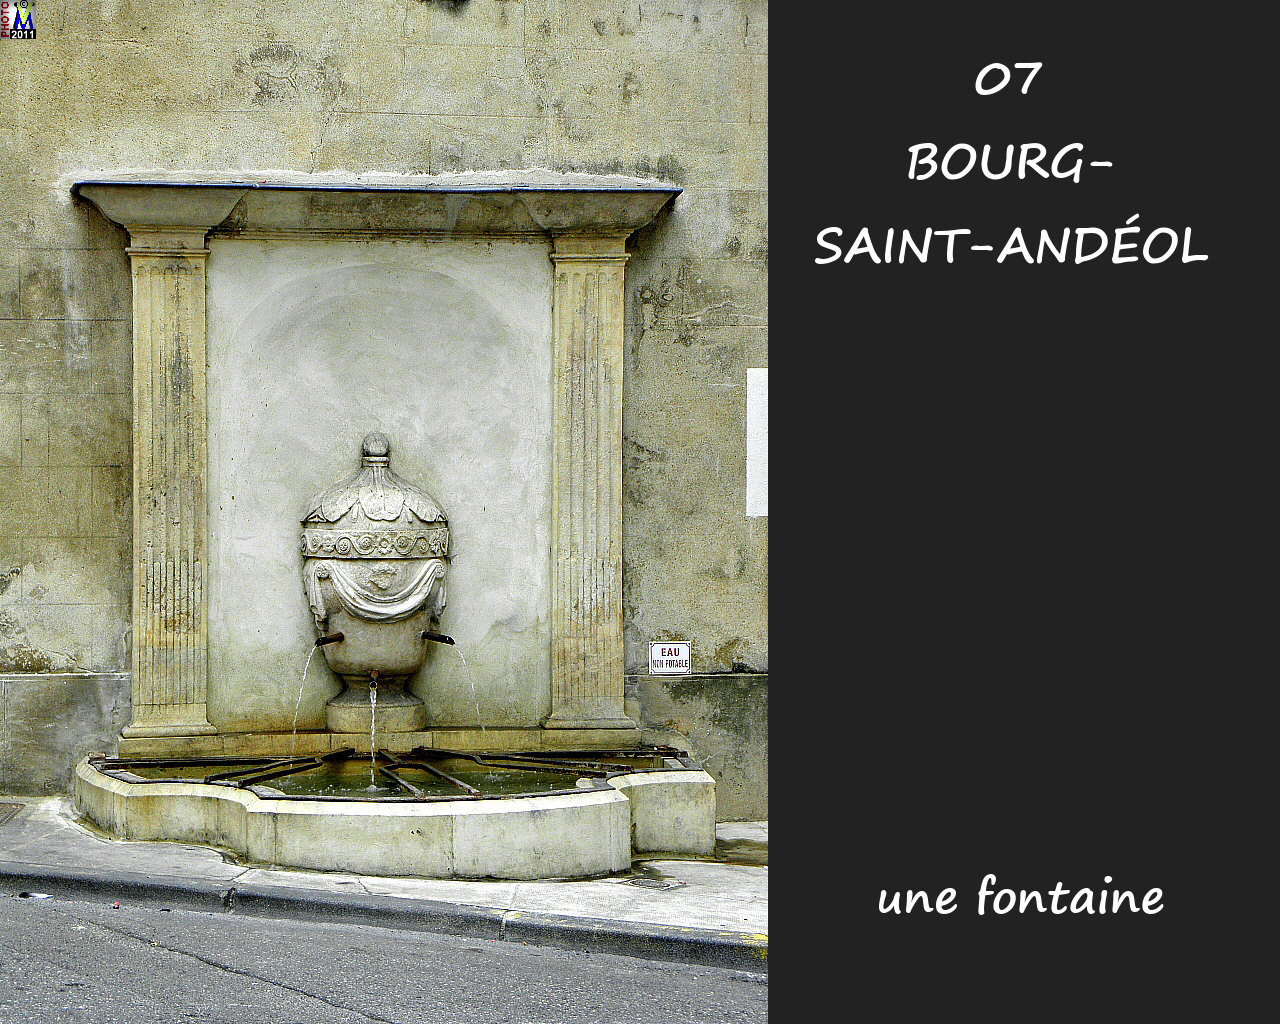 07BOURG-SAINT-ANDEOL_fontaine_100.jpg